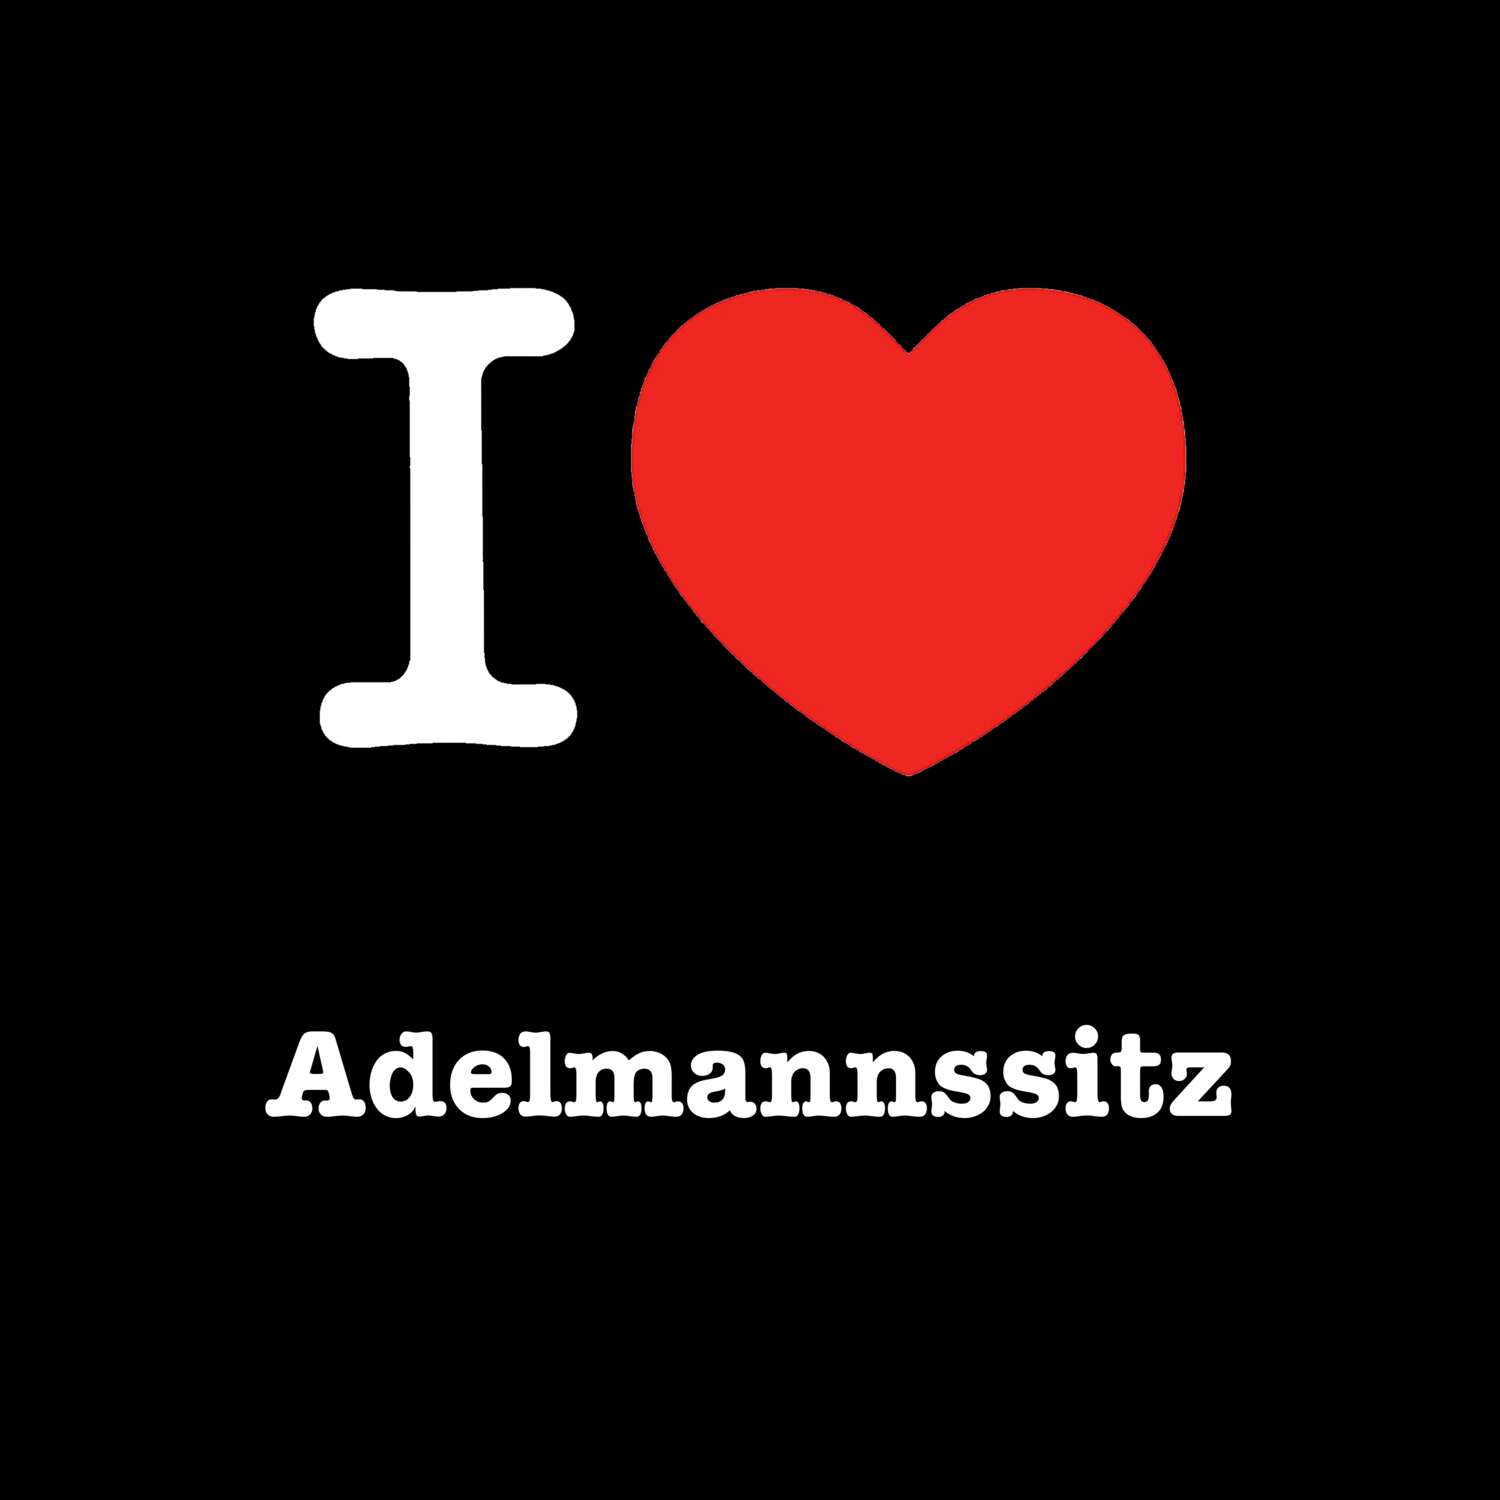 Adelmannssitz T-Shirt »I love«